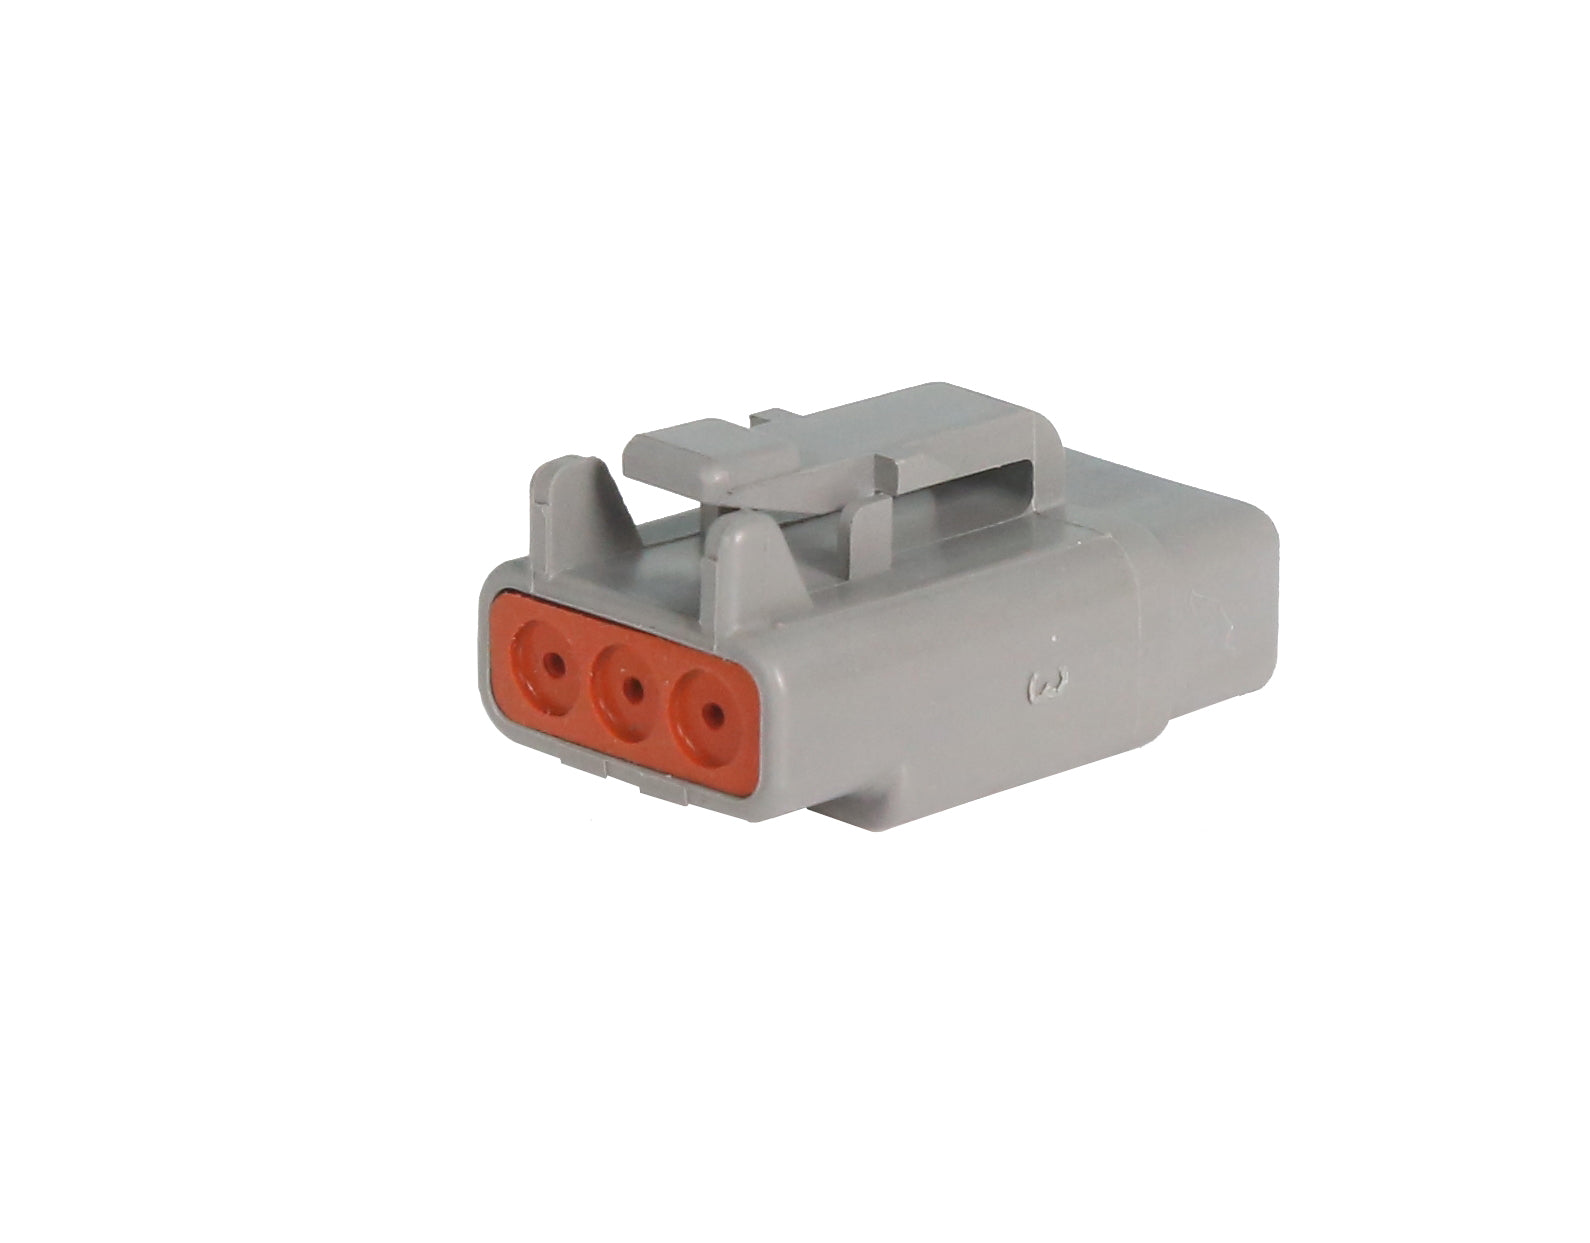 03 Pin Mini Deutsch Plug | C-DTM06-3S